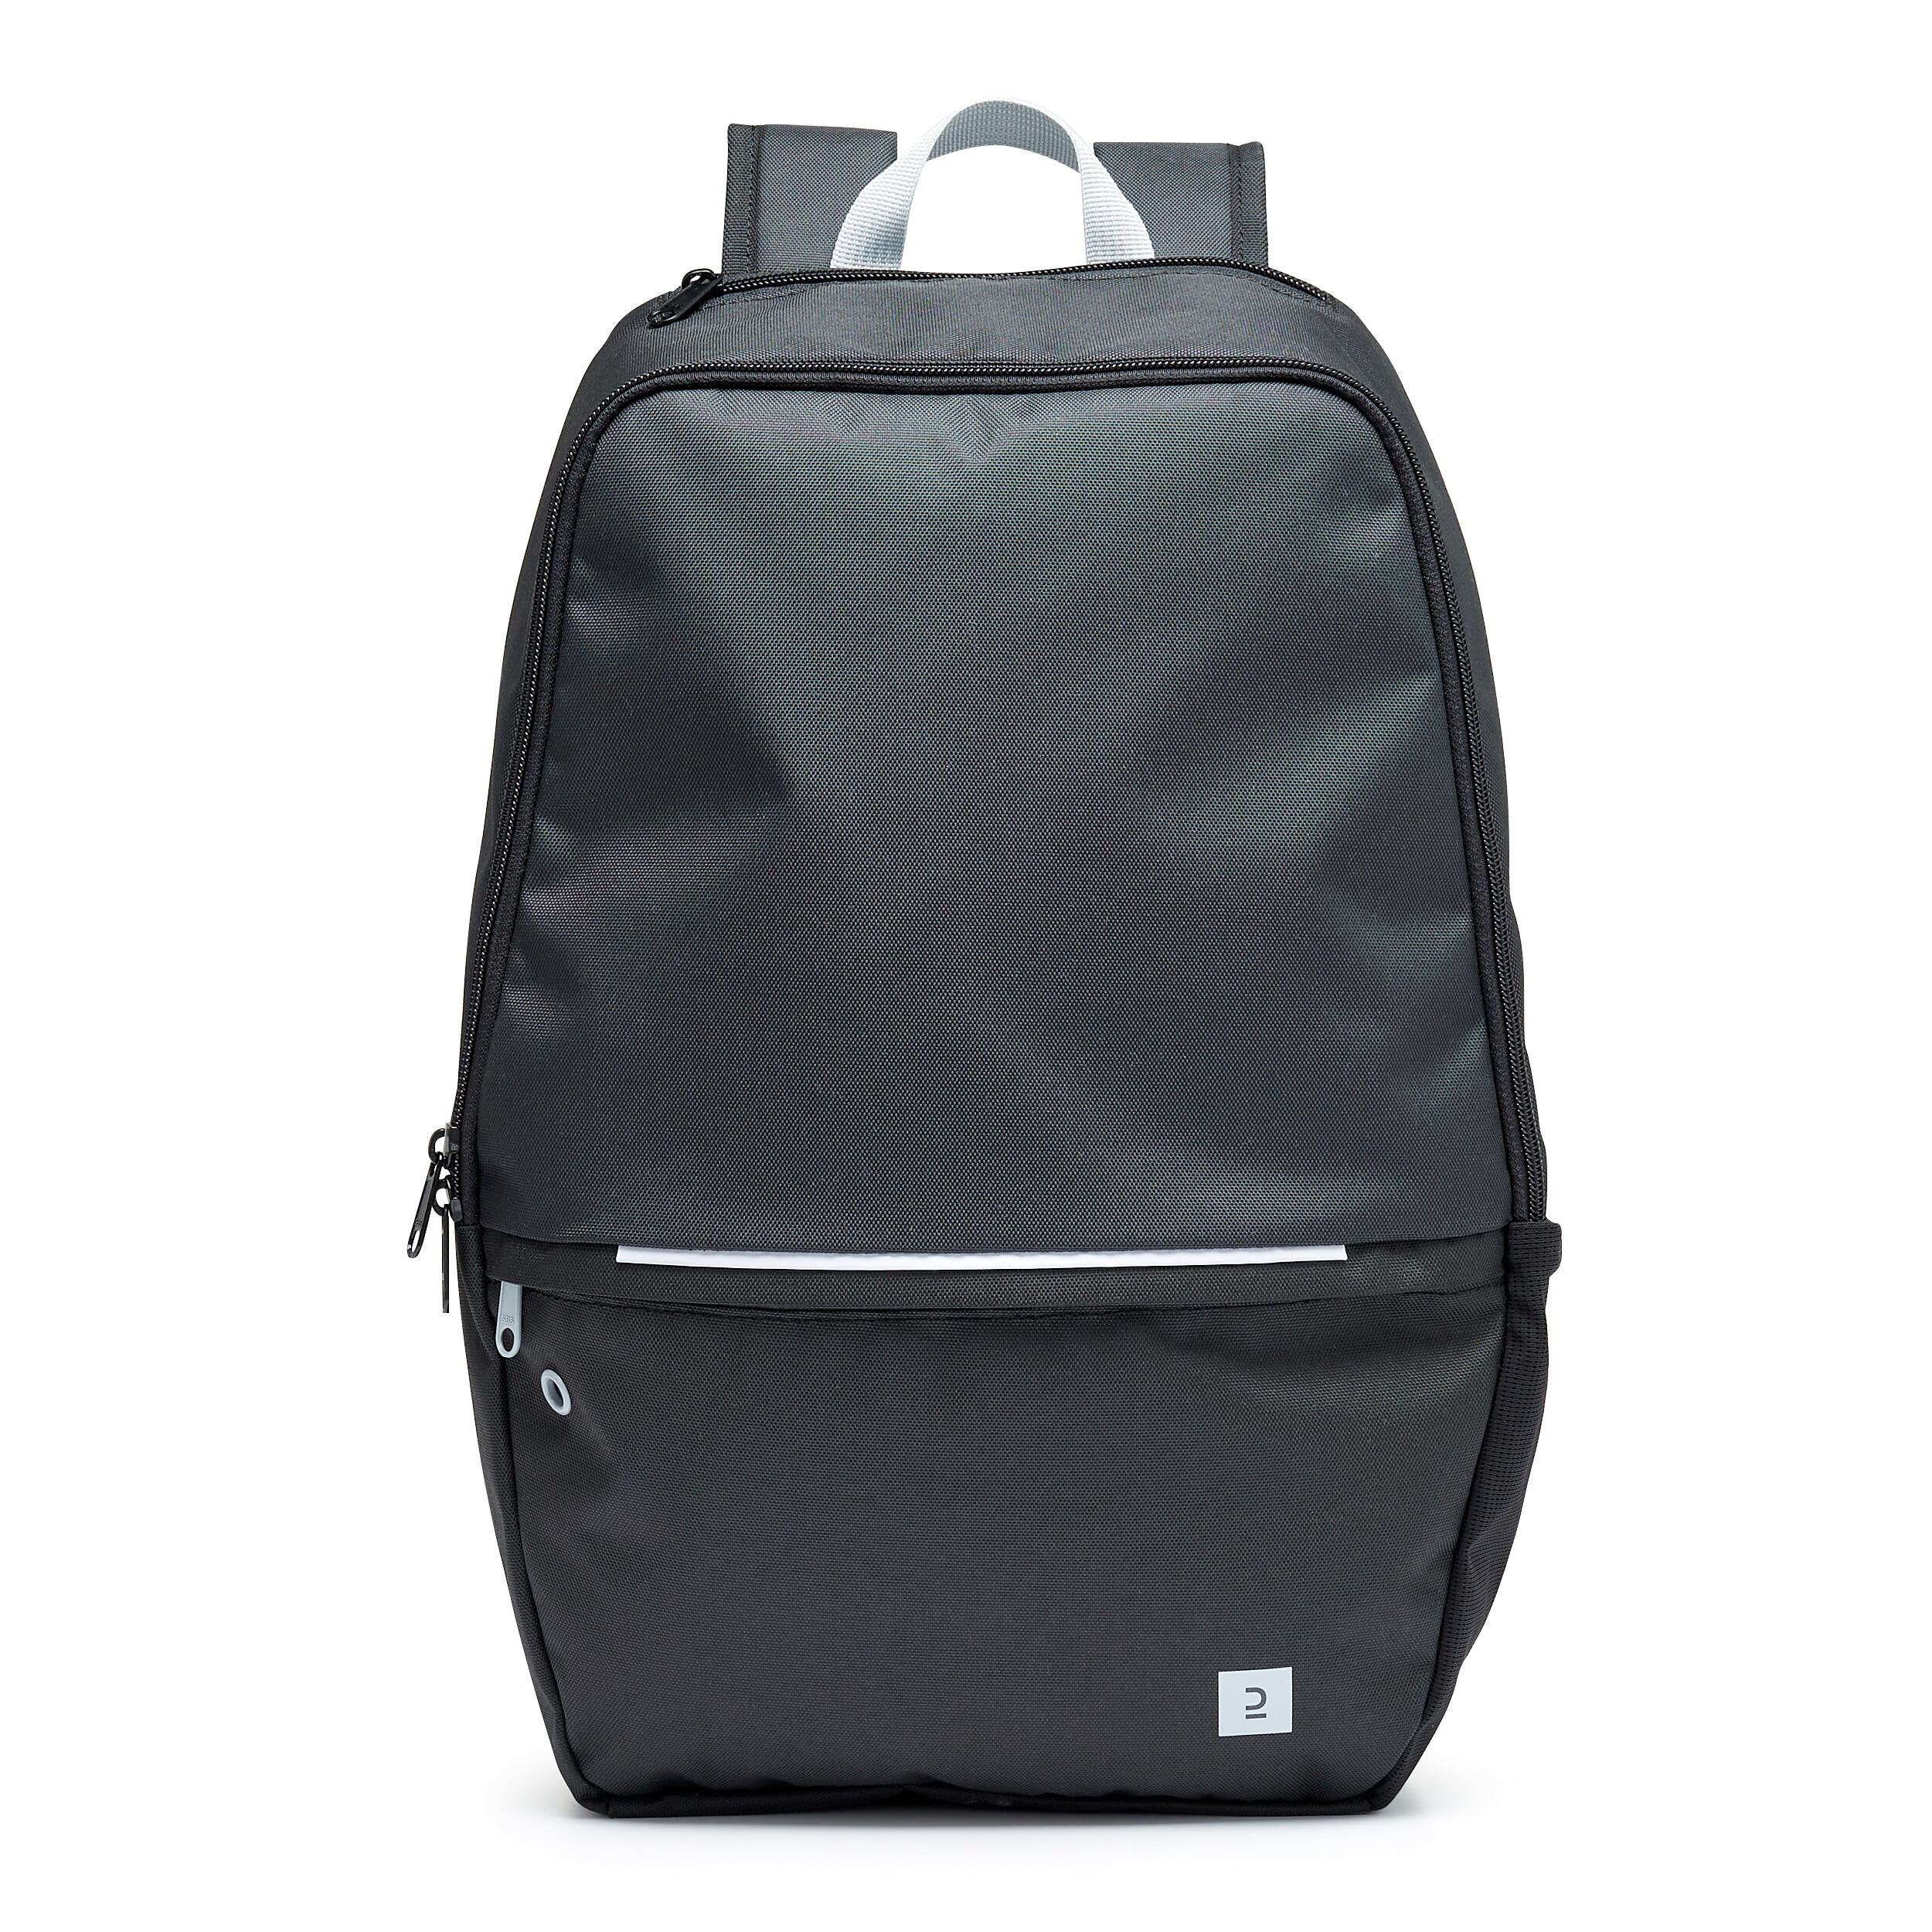 Essential Backpack - 17 L Black - Carbon grey, Black, Pearl grey ...